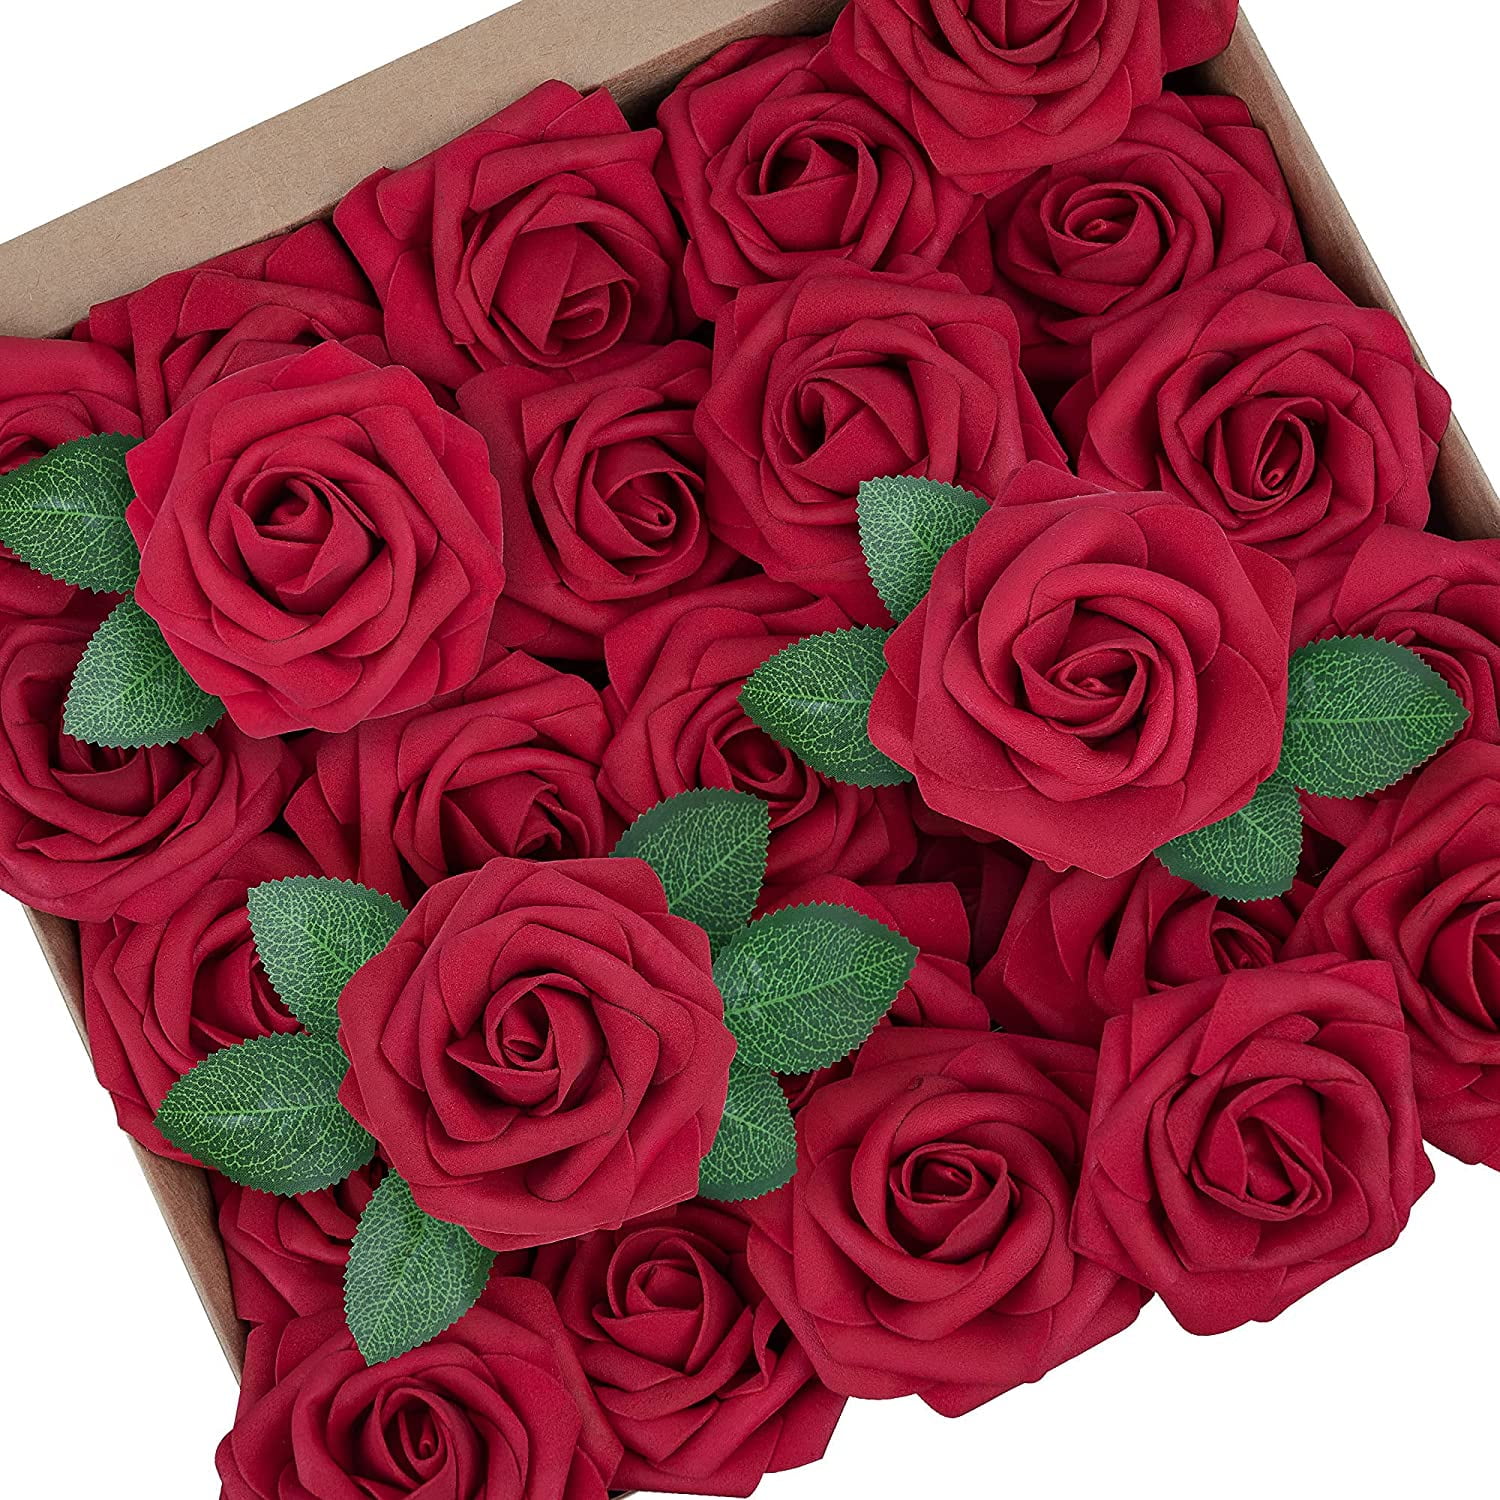 Artificial Foam Roses Flowers With Stem Wedding Bride Bouquet Party DIY Decor 